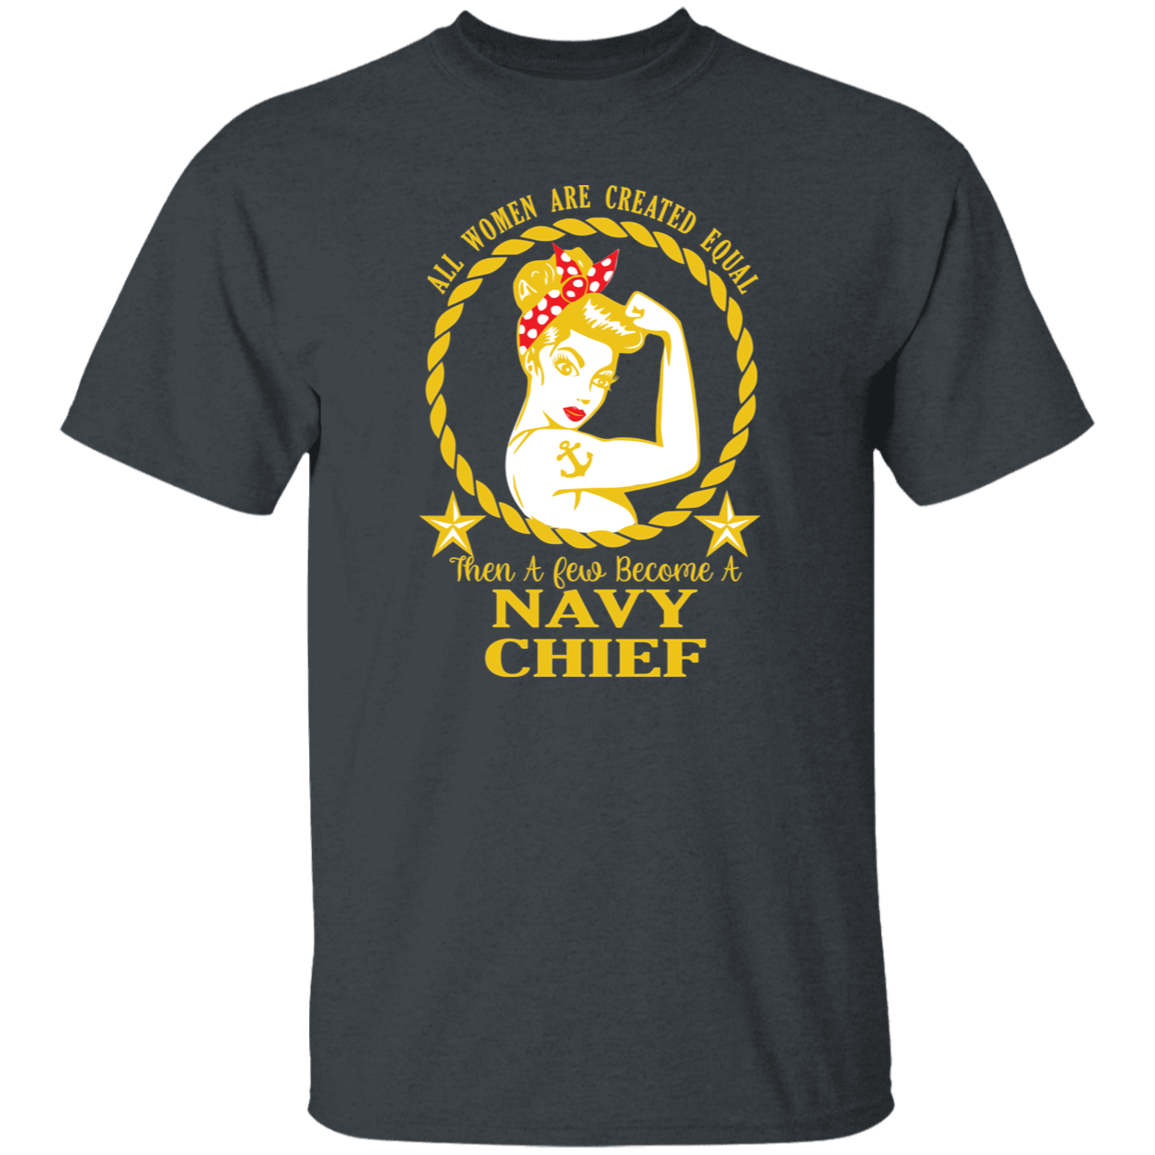 Navy Girl V2 5.3 oz. T-Shirt